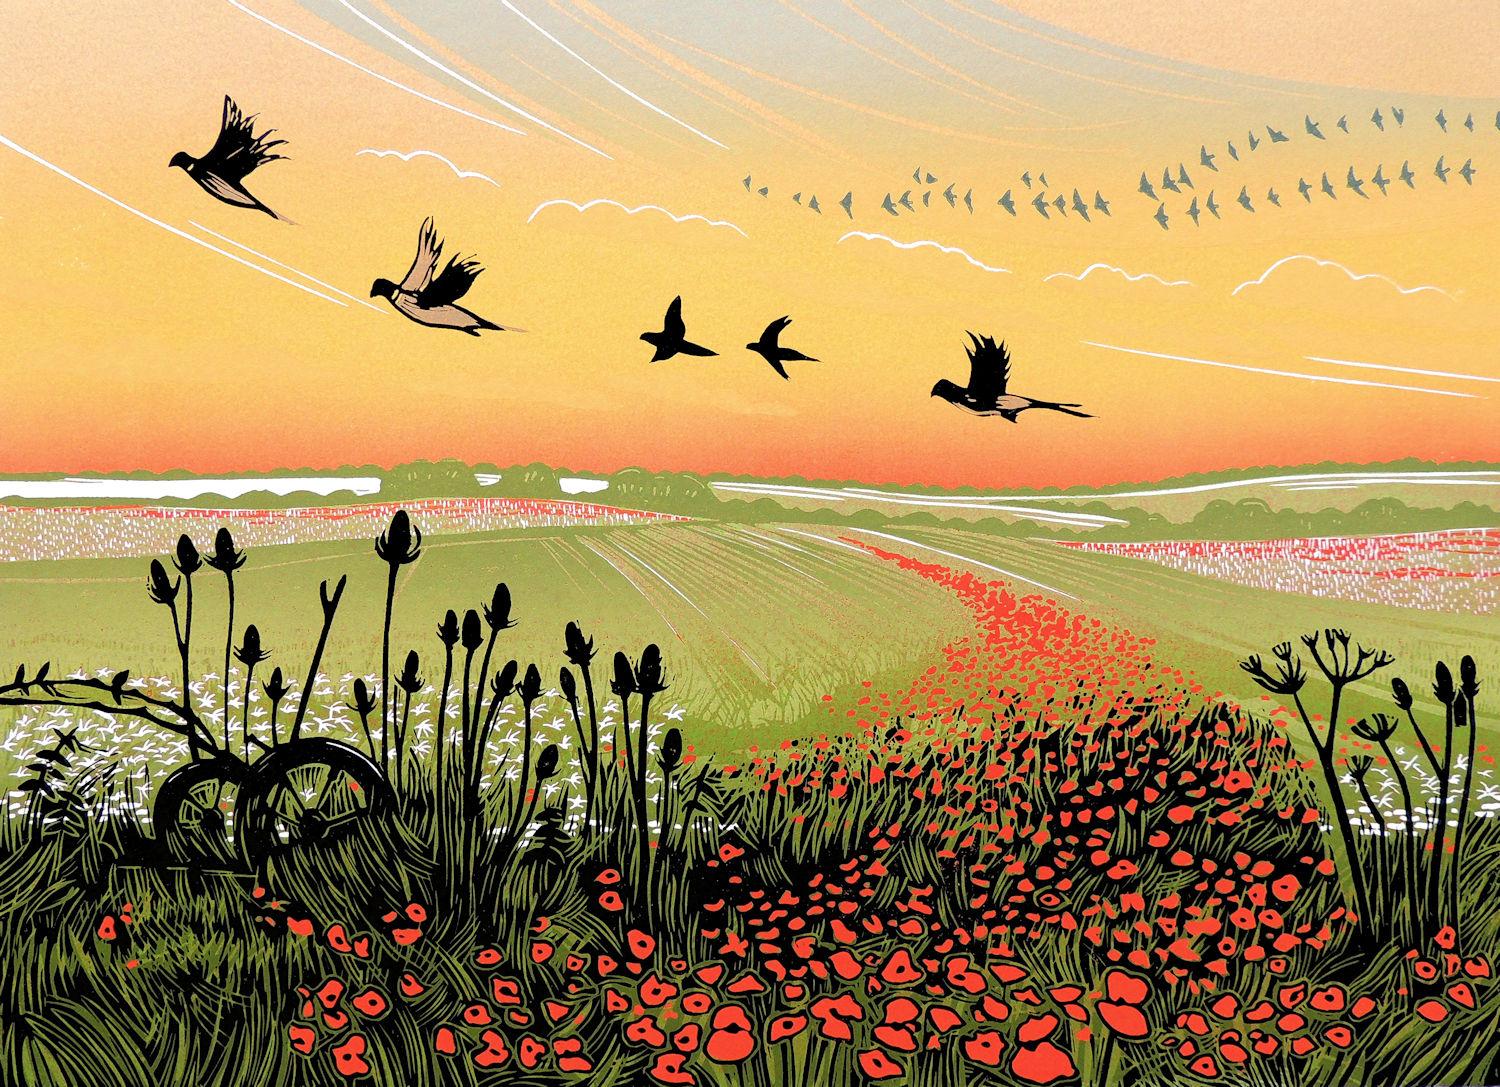 Rob Barnes Landscape Print - Flight Path, Linocut Print, Poppy Field, Remembrance, Pheasants, Rural art